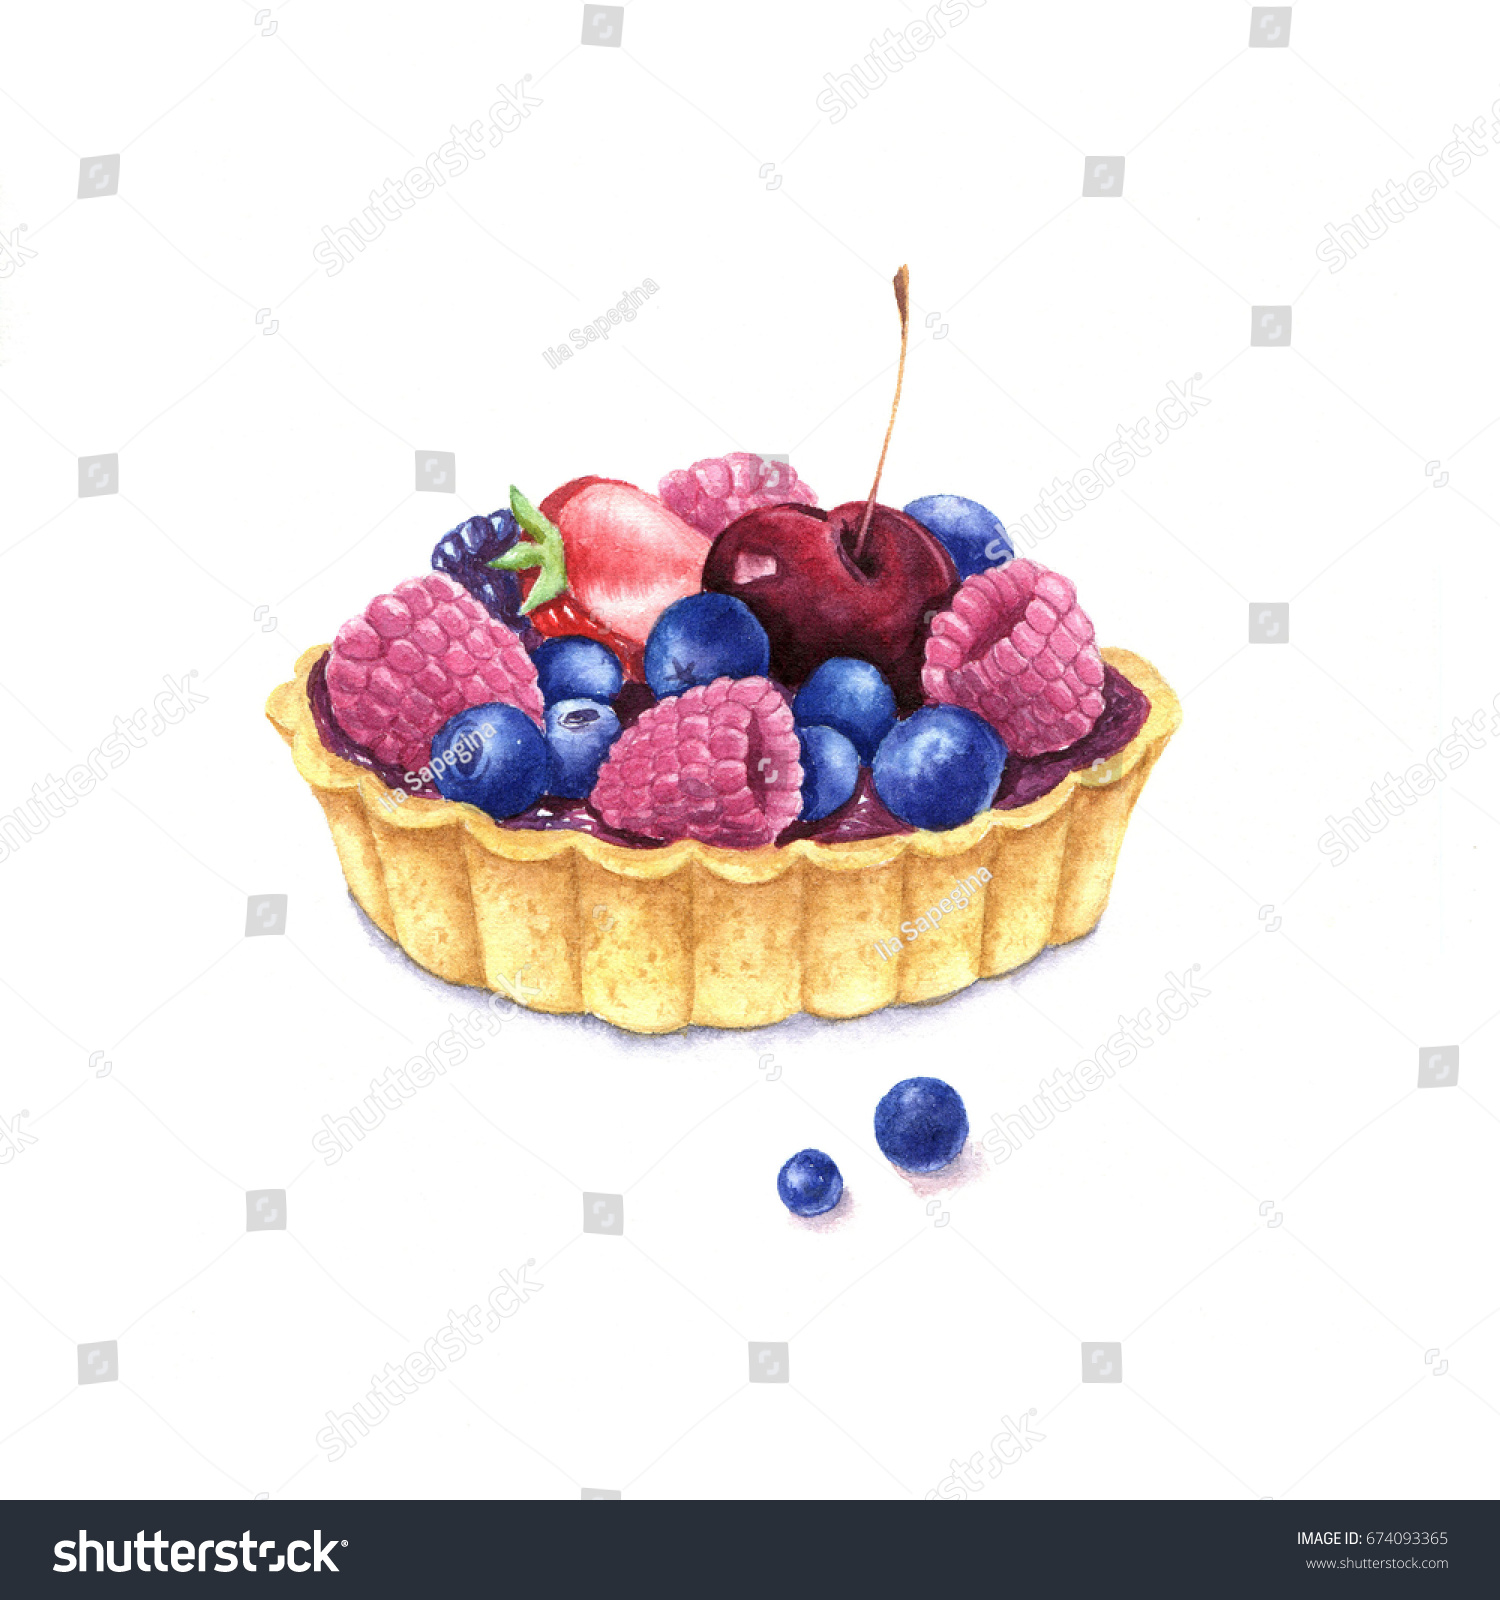 2,833 Fruit tart drawing Images, Stock Photos & Vectors | Shutterstock